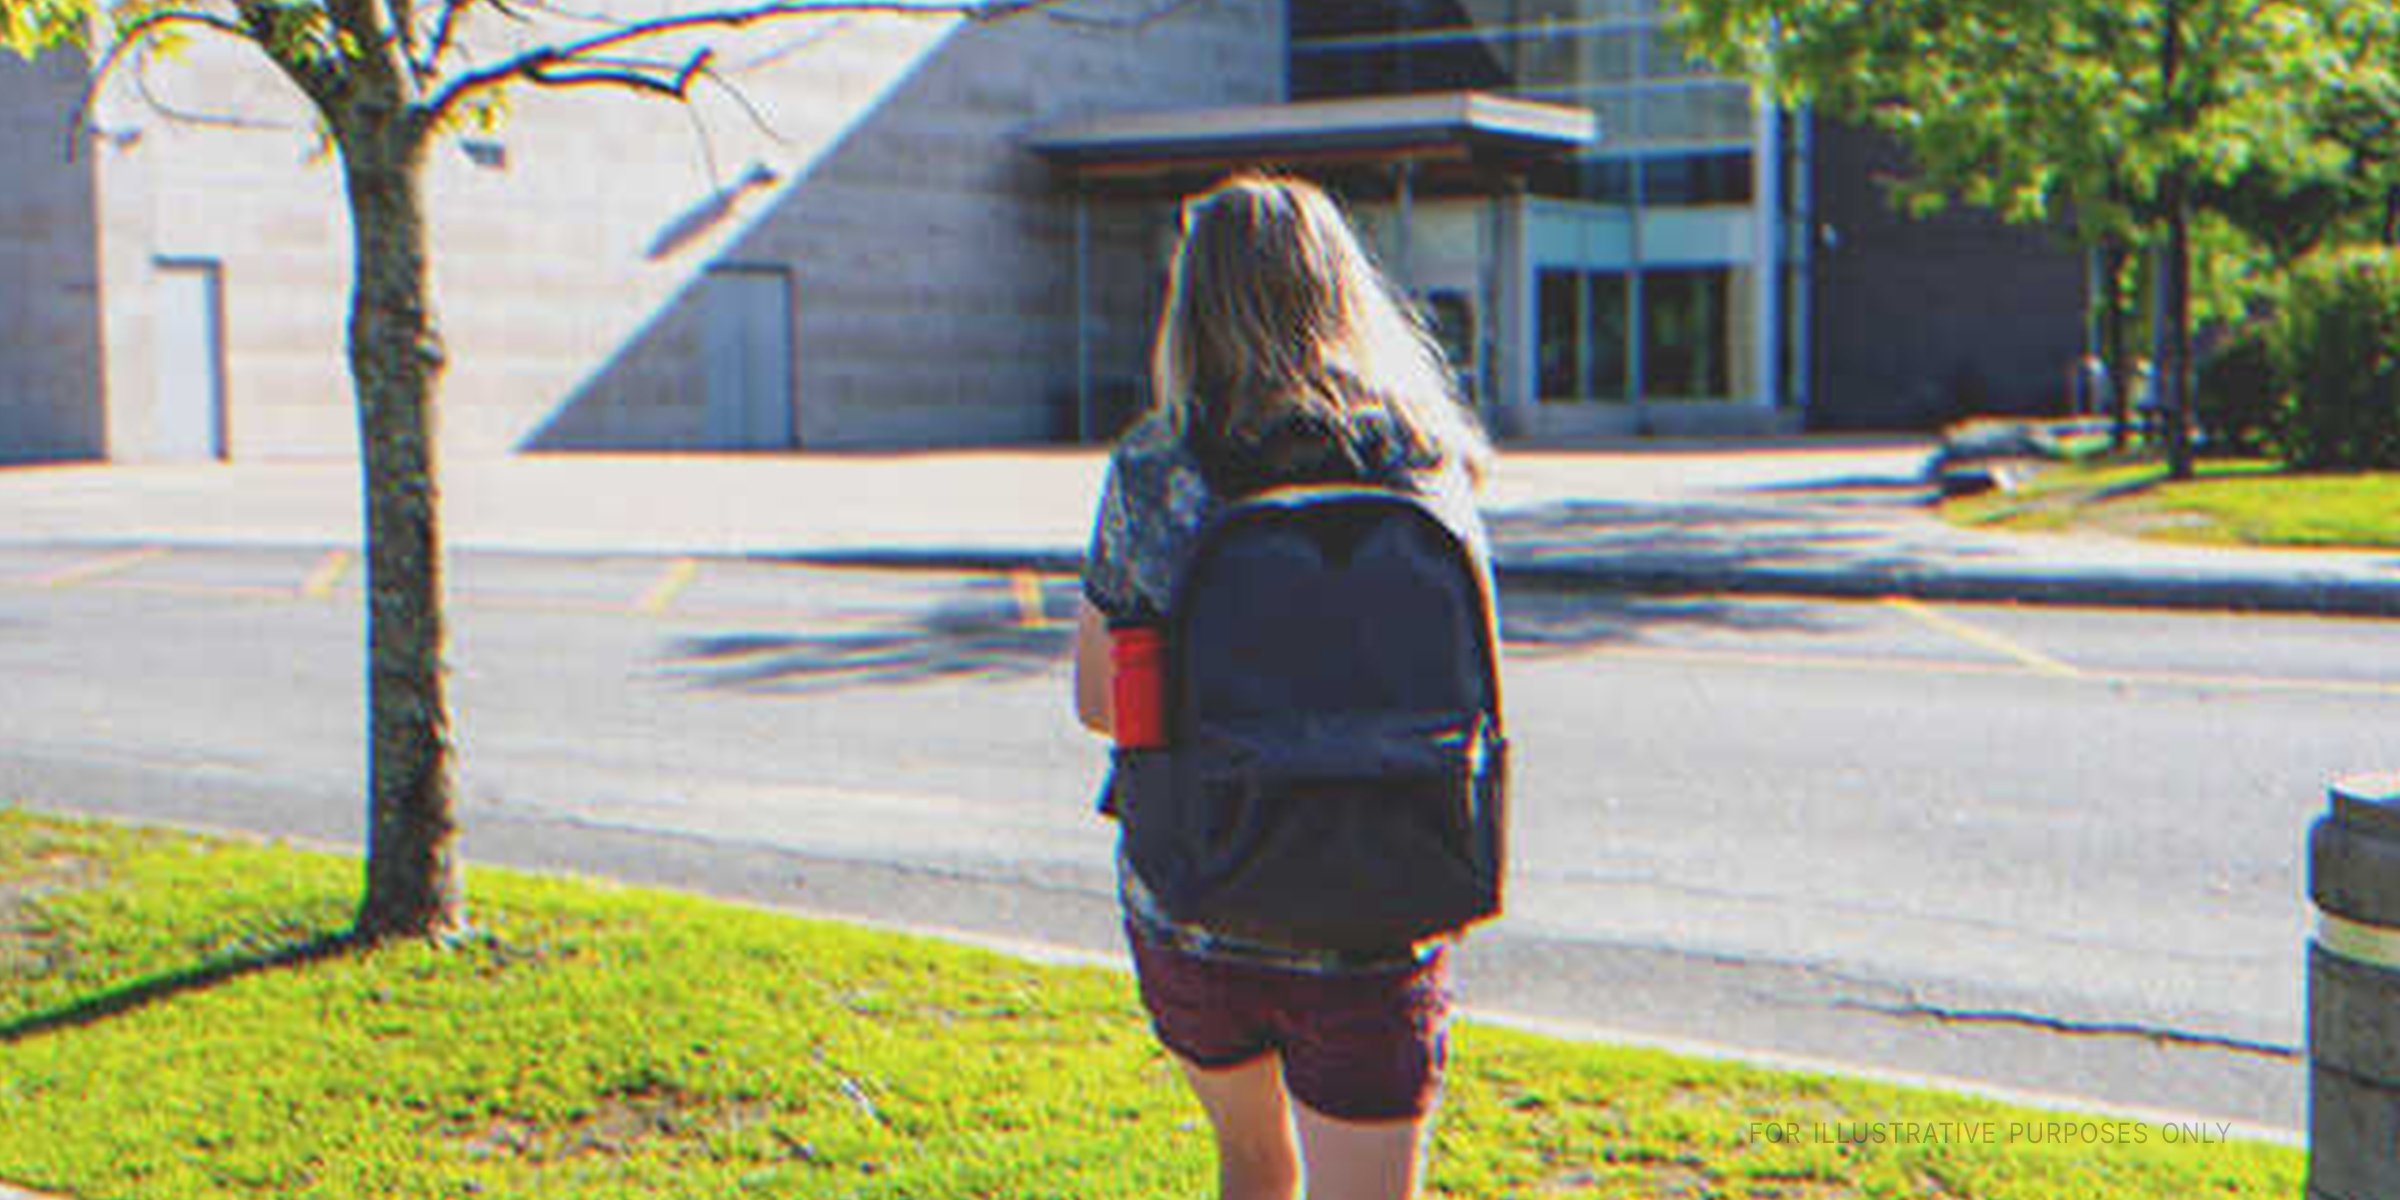 A teenager walking to school. | Source: Shutterstock